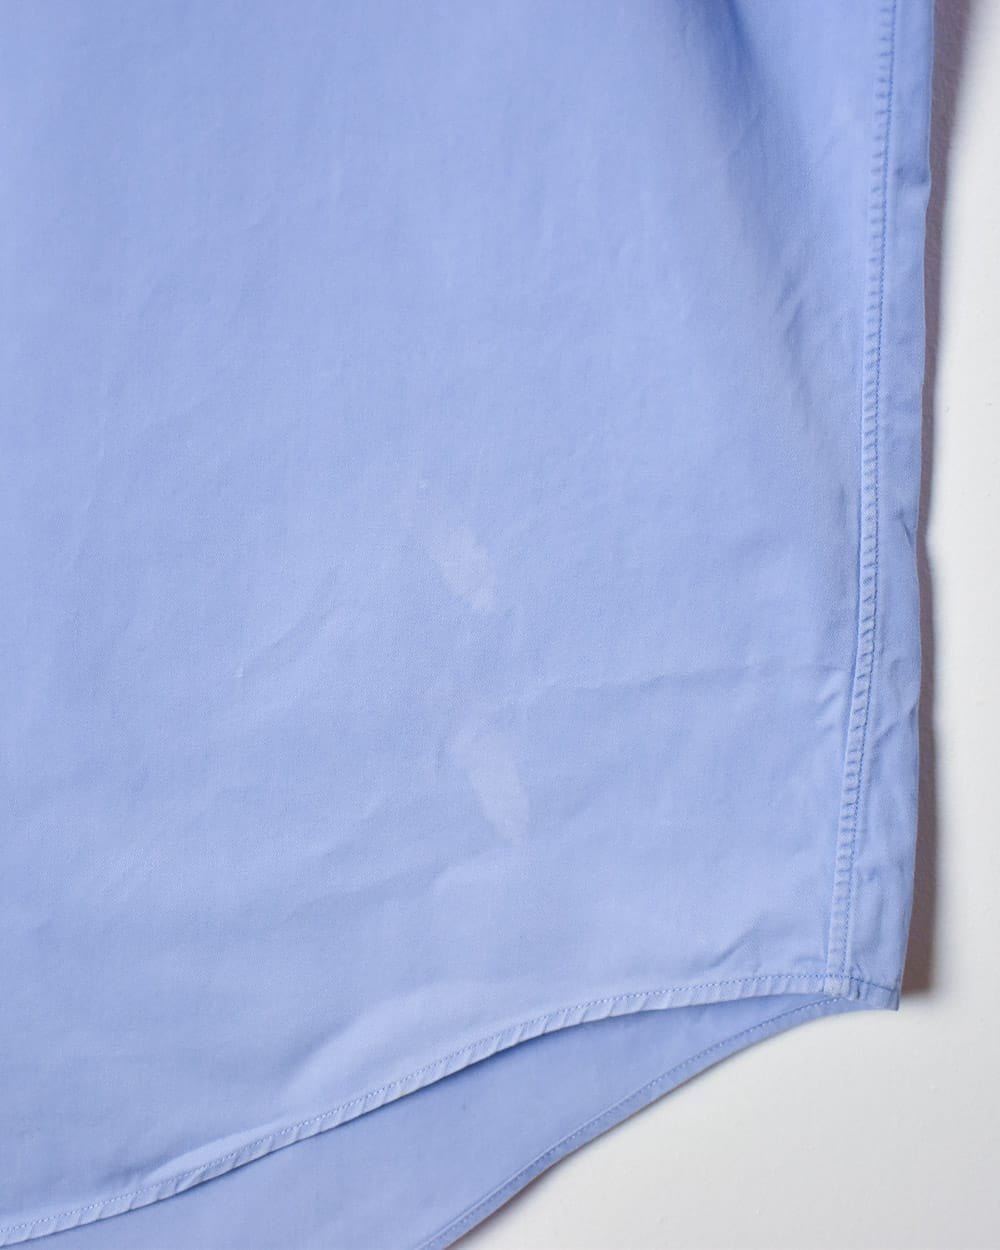 BabyBlue Polo Ralph Lauren Blake Short Sleeved Shirt - XX-Large